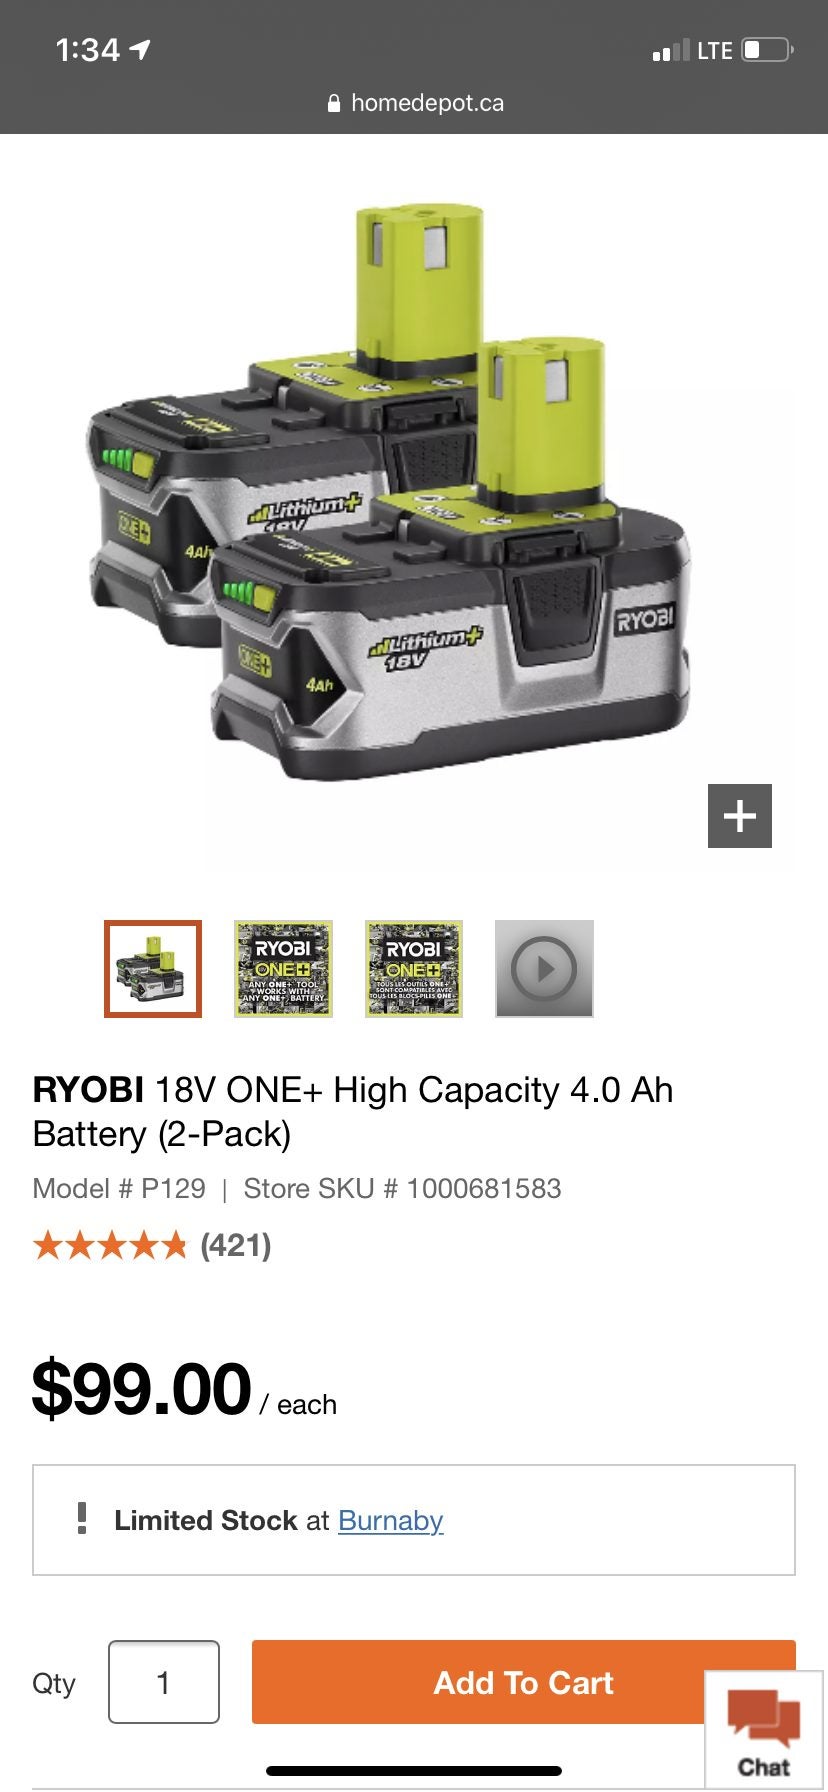 RYOBI 18V ONE+ High Capacity 4.0 Ah Battery (2-Pack)